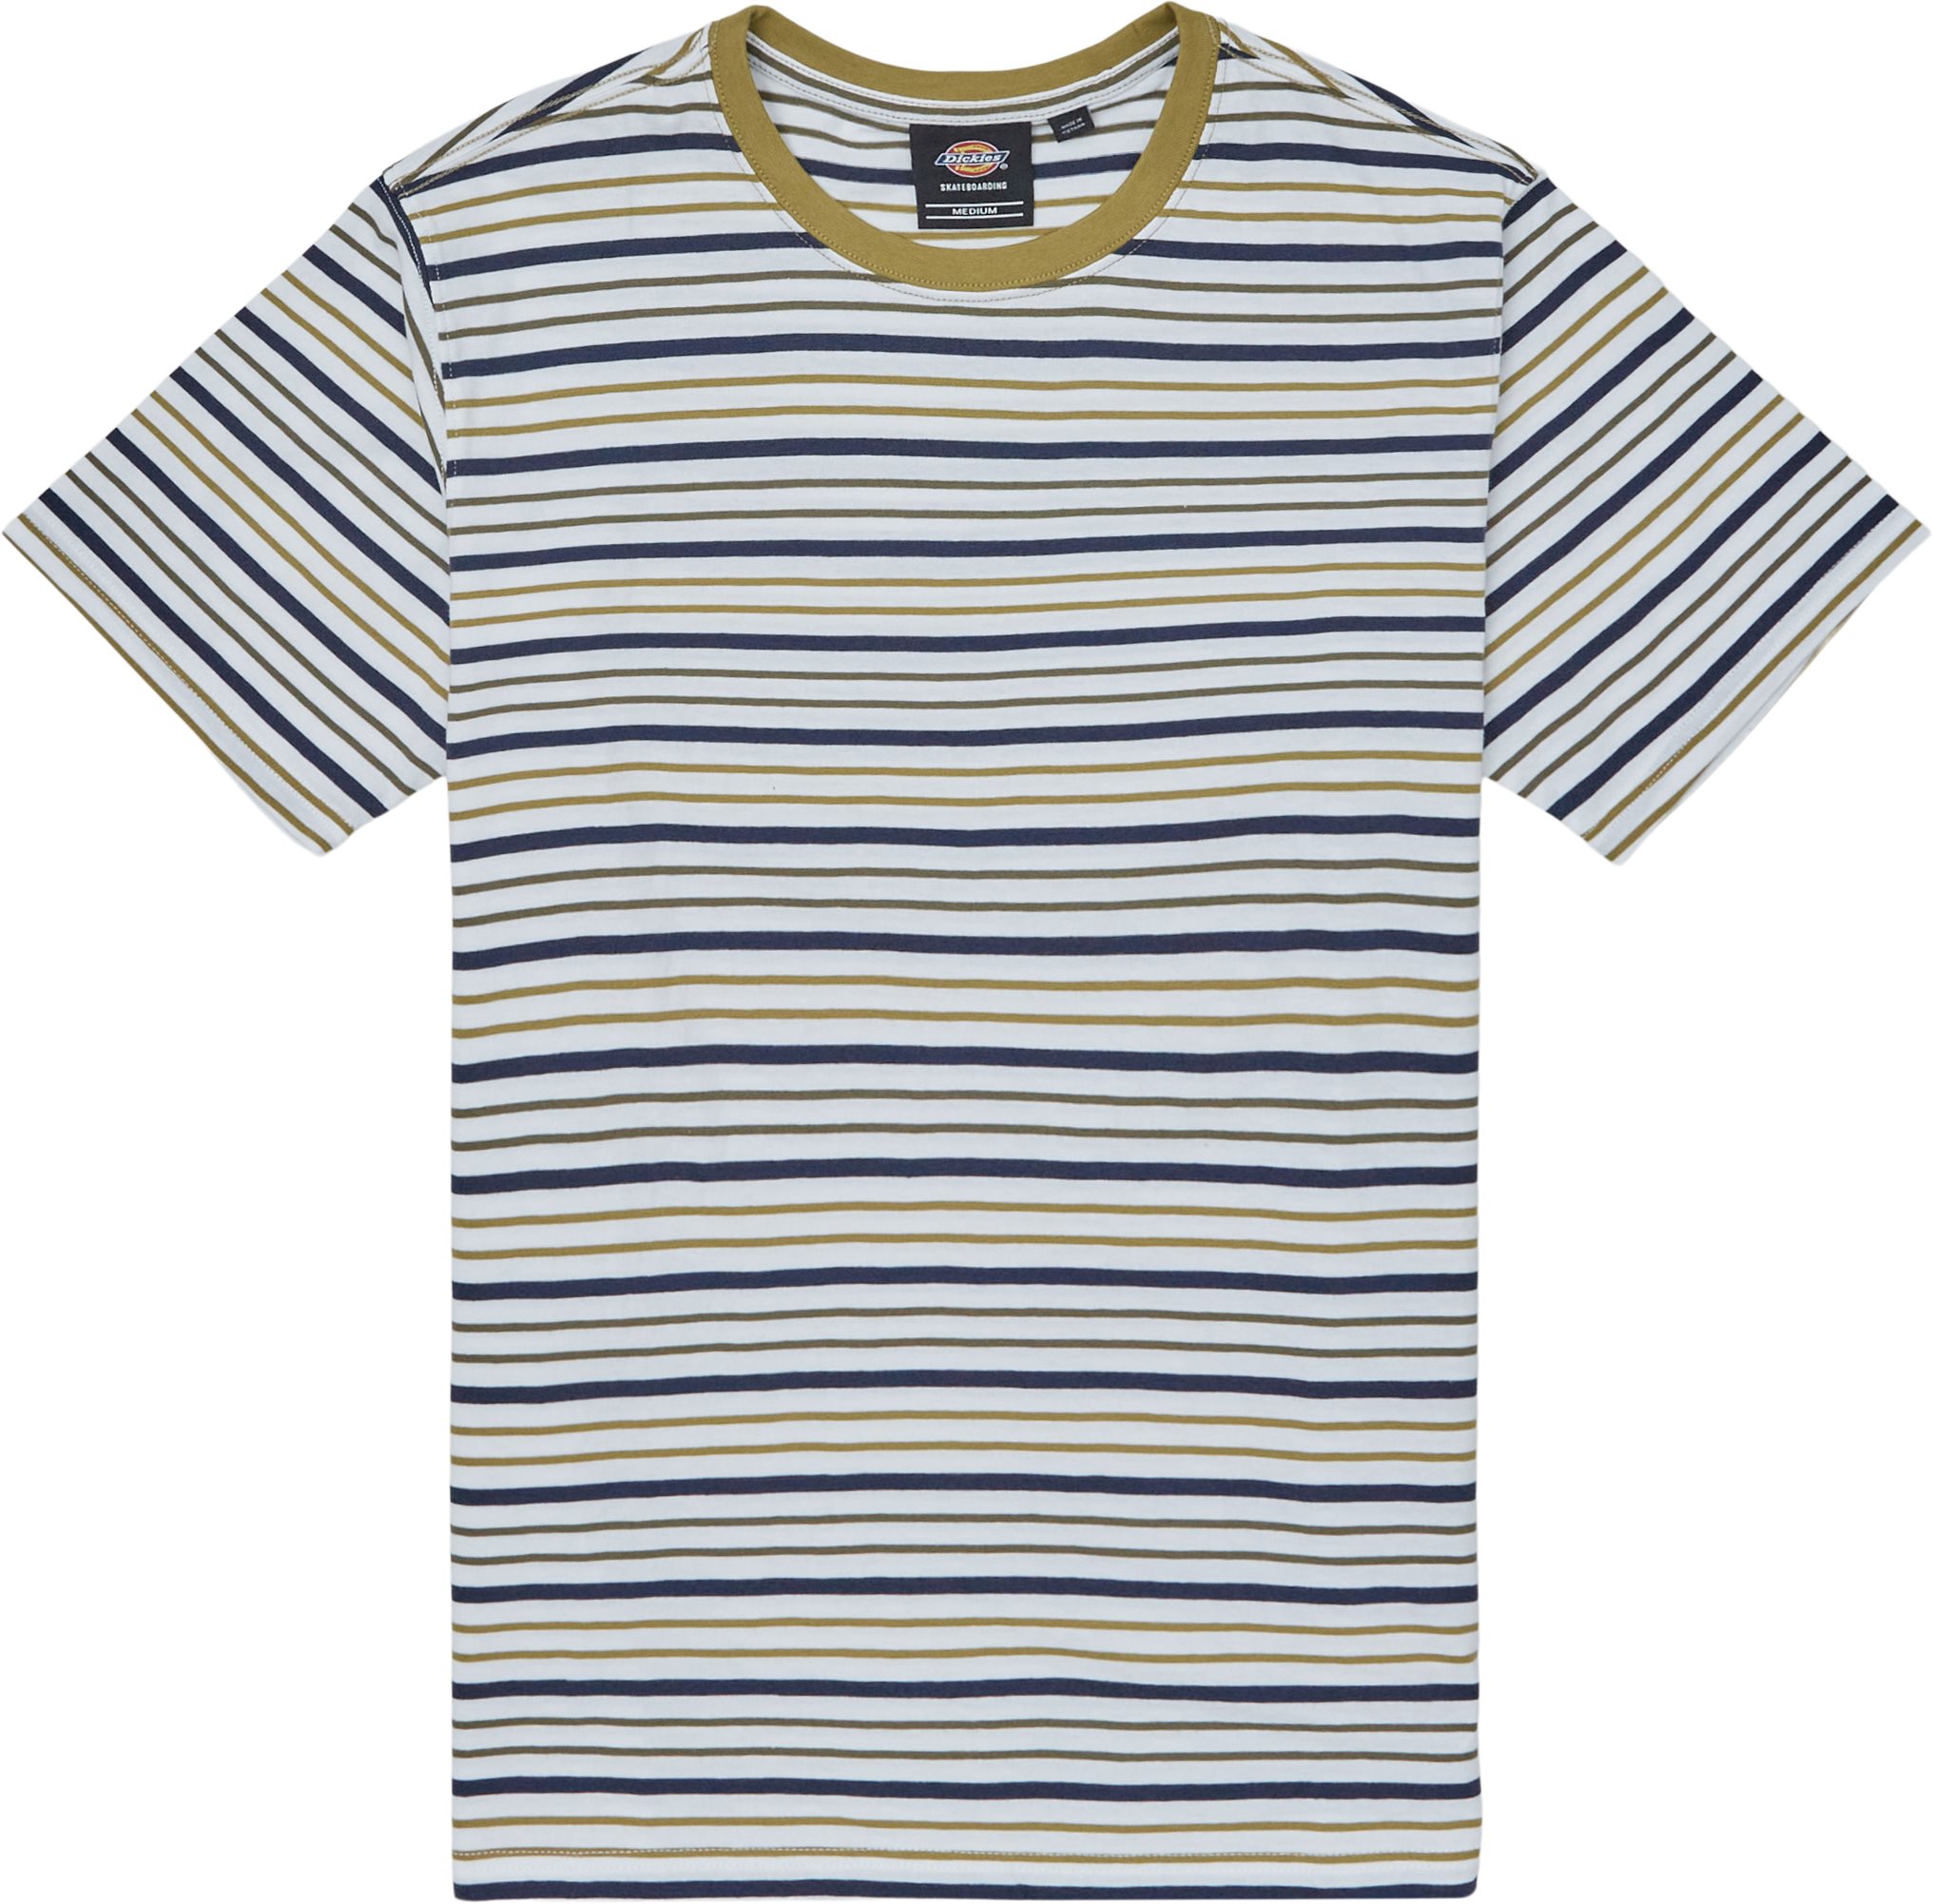 Bothell Stripe Tee - T-shirts - Regular fit - Grön